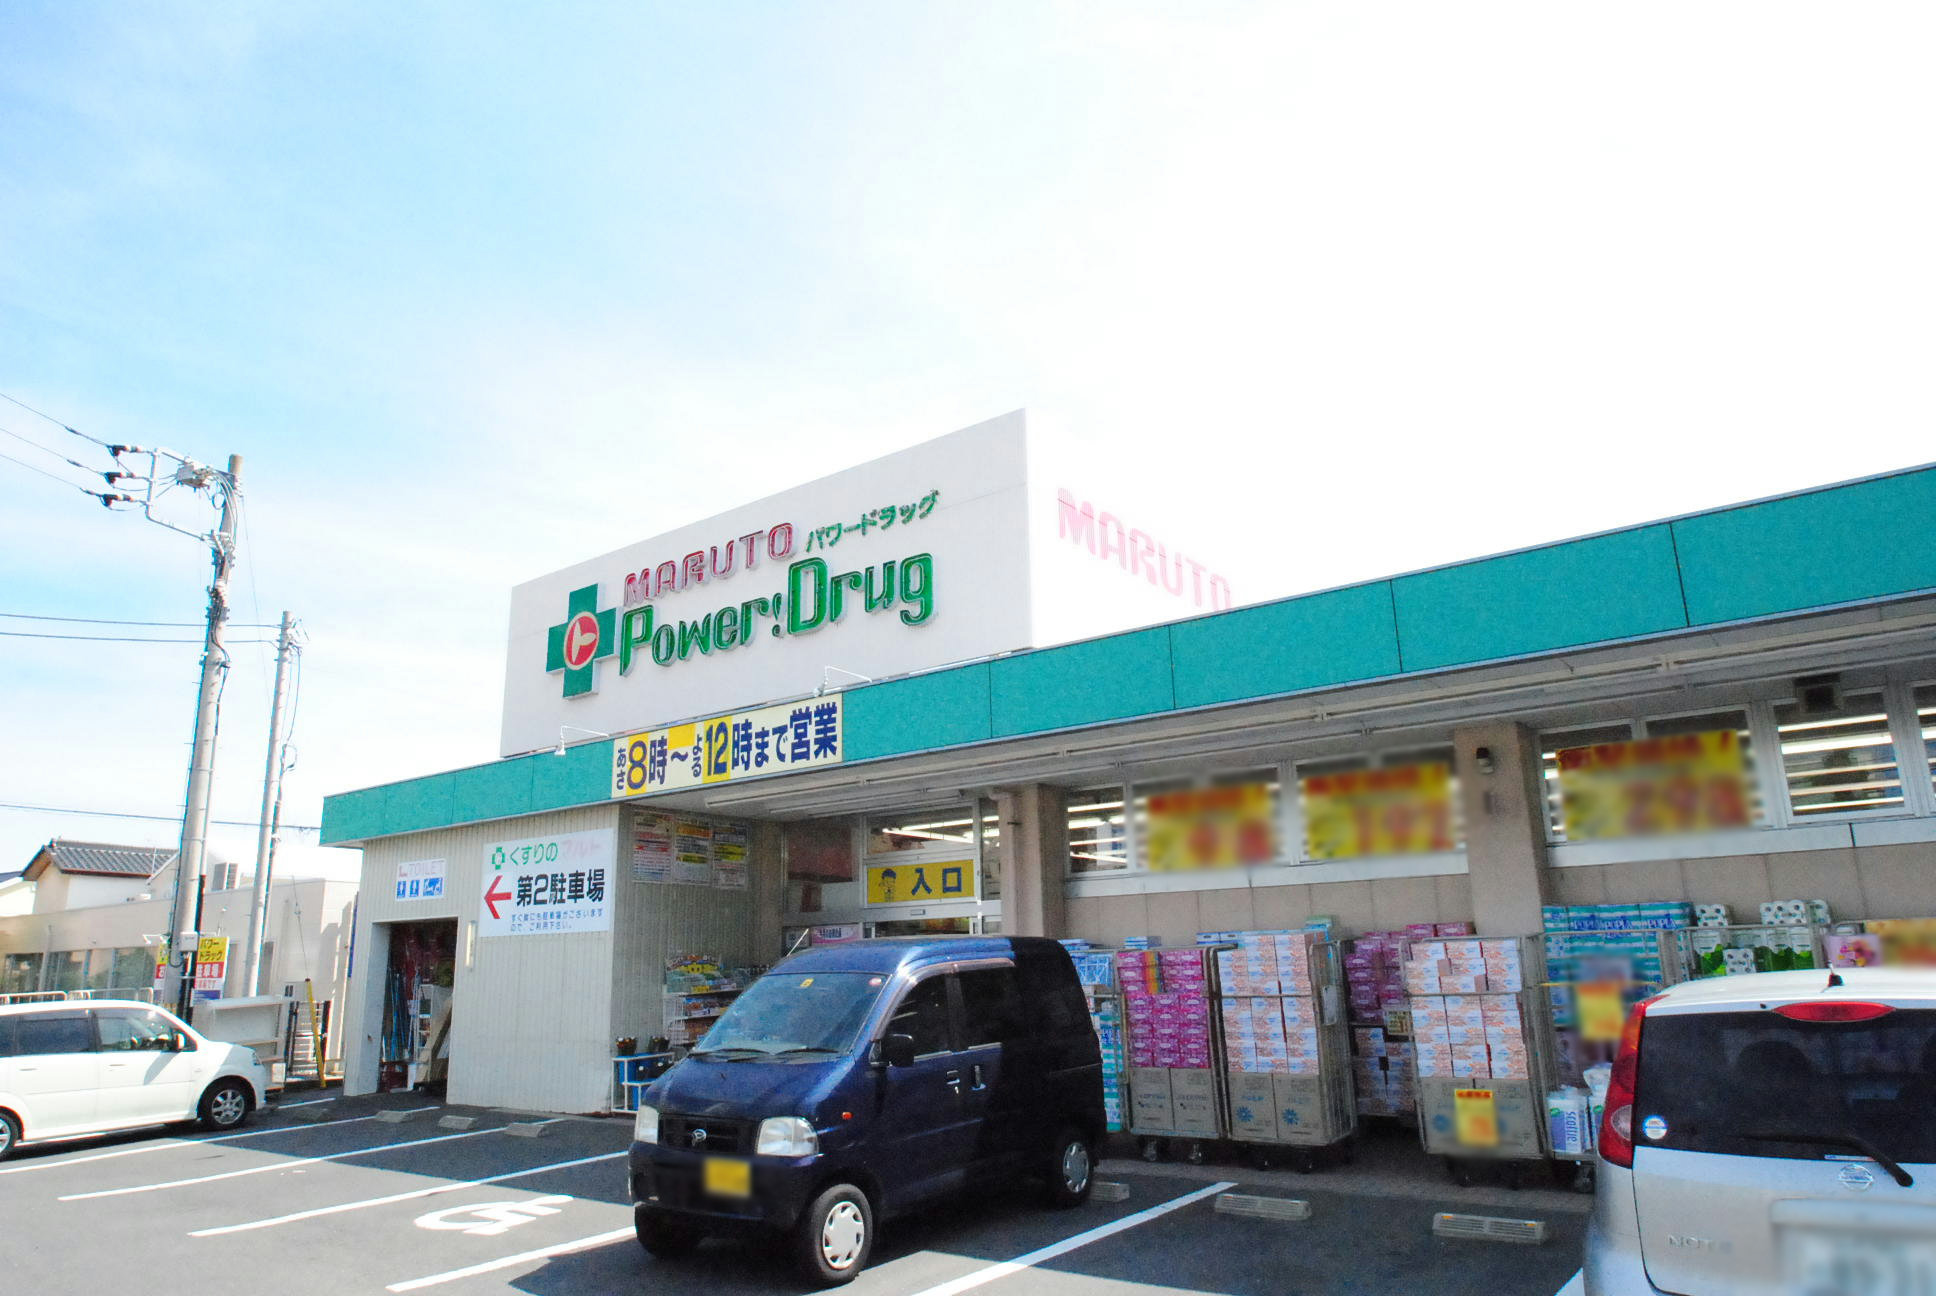 Dorakkusutoa. Marthe power drag Sengoku shop 551m until (drugstore)